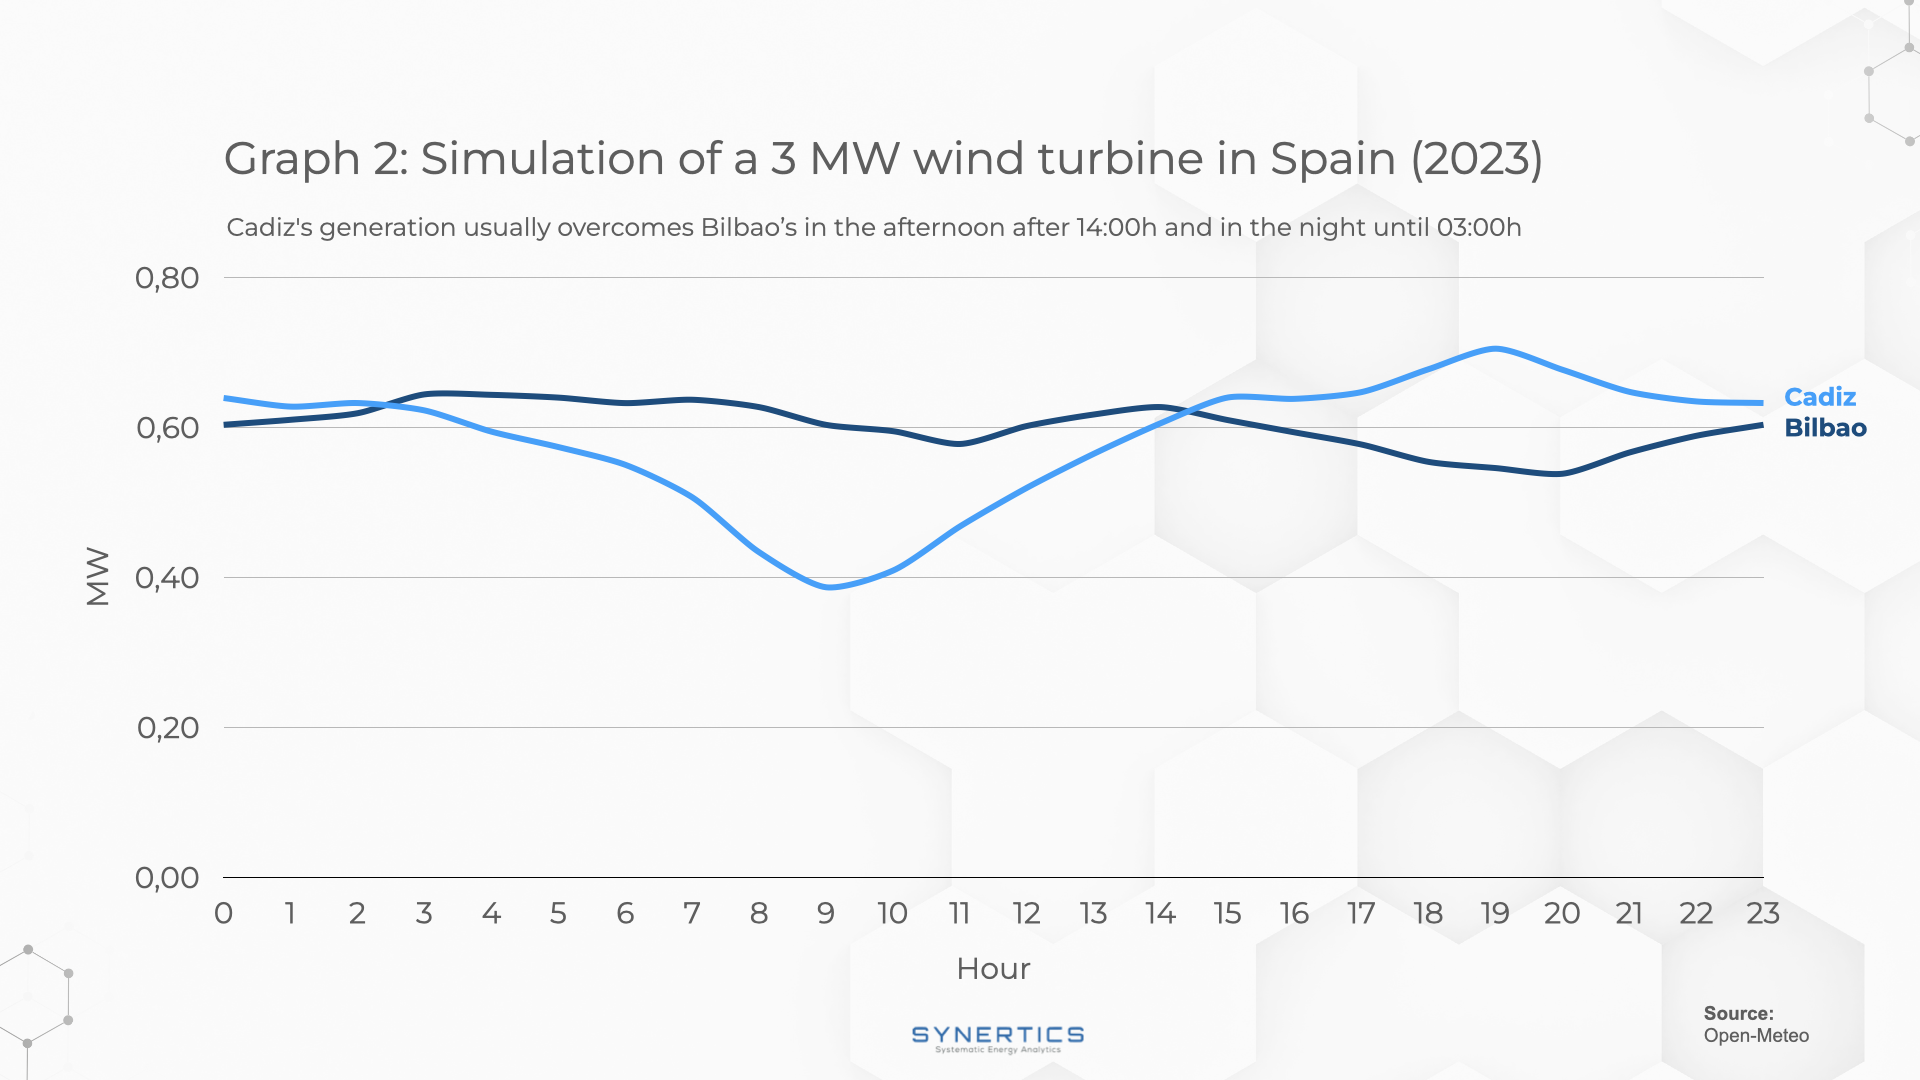 Simulation of 3MW wind turbine profile in Bilbao and Cadiz